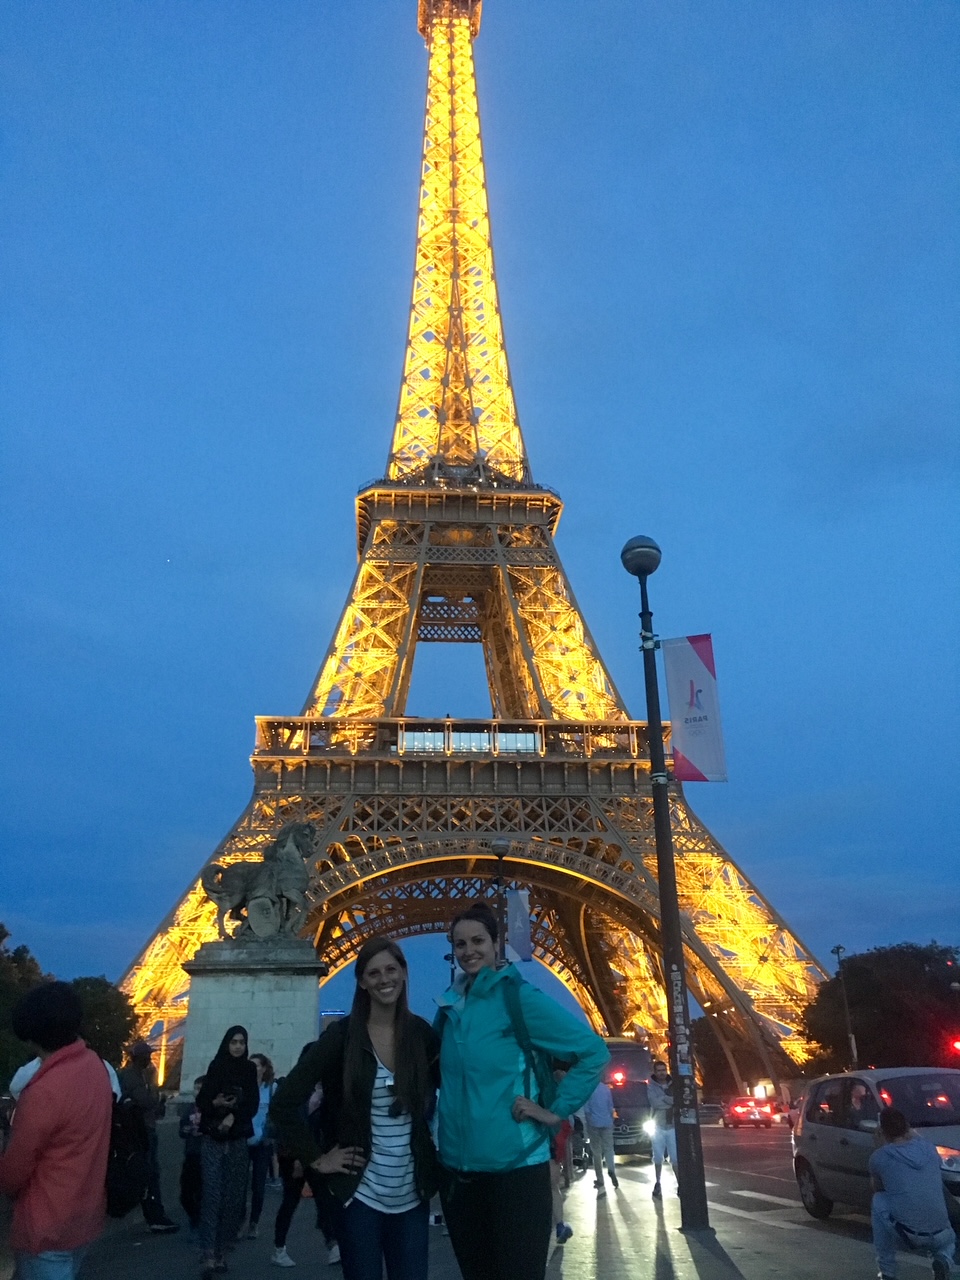 Sara and Katie at the Eiffel Tower at night